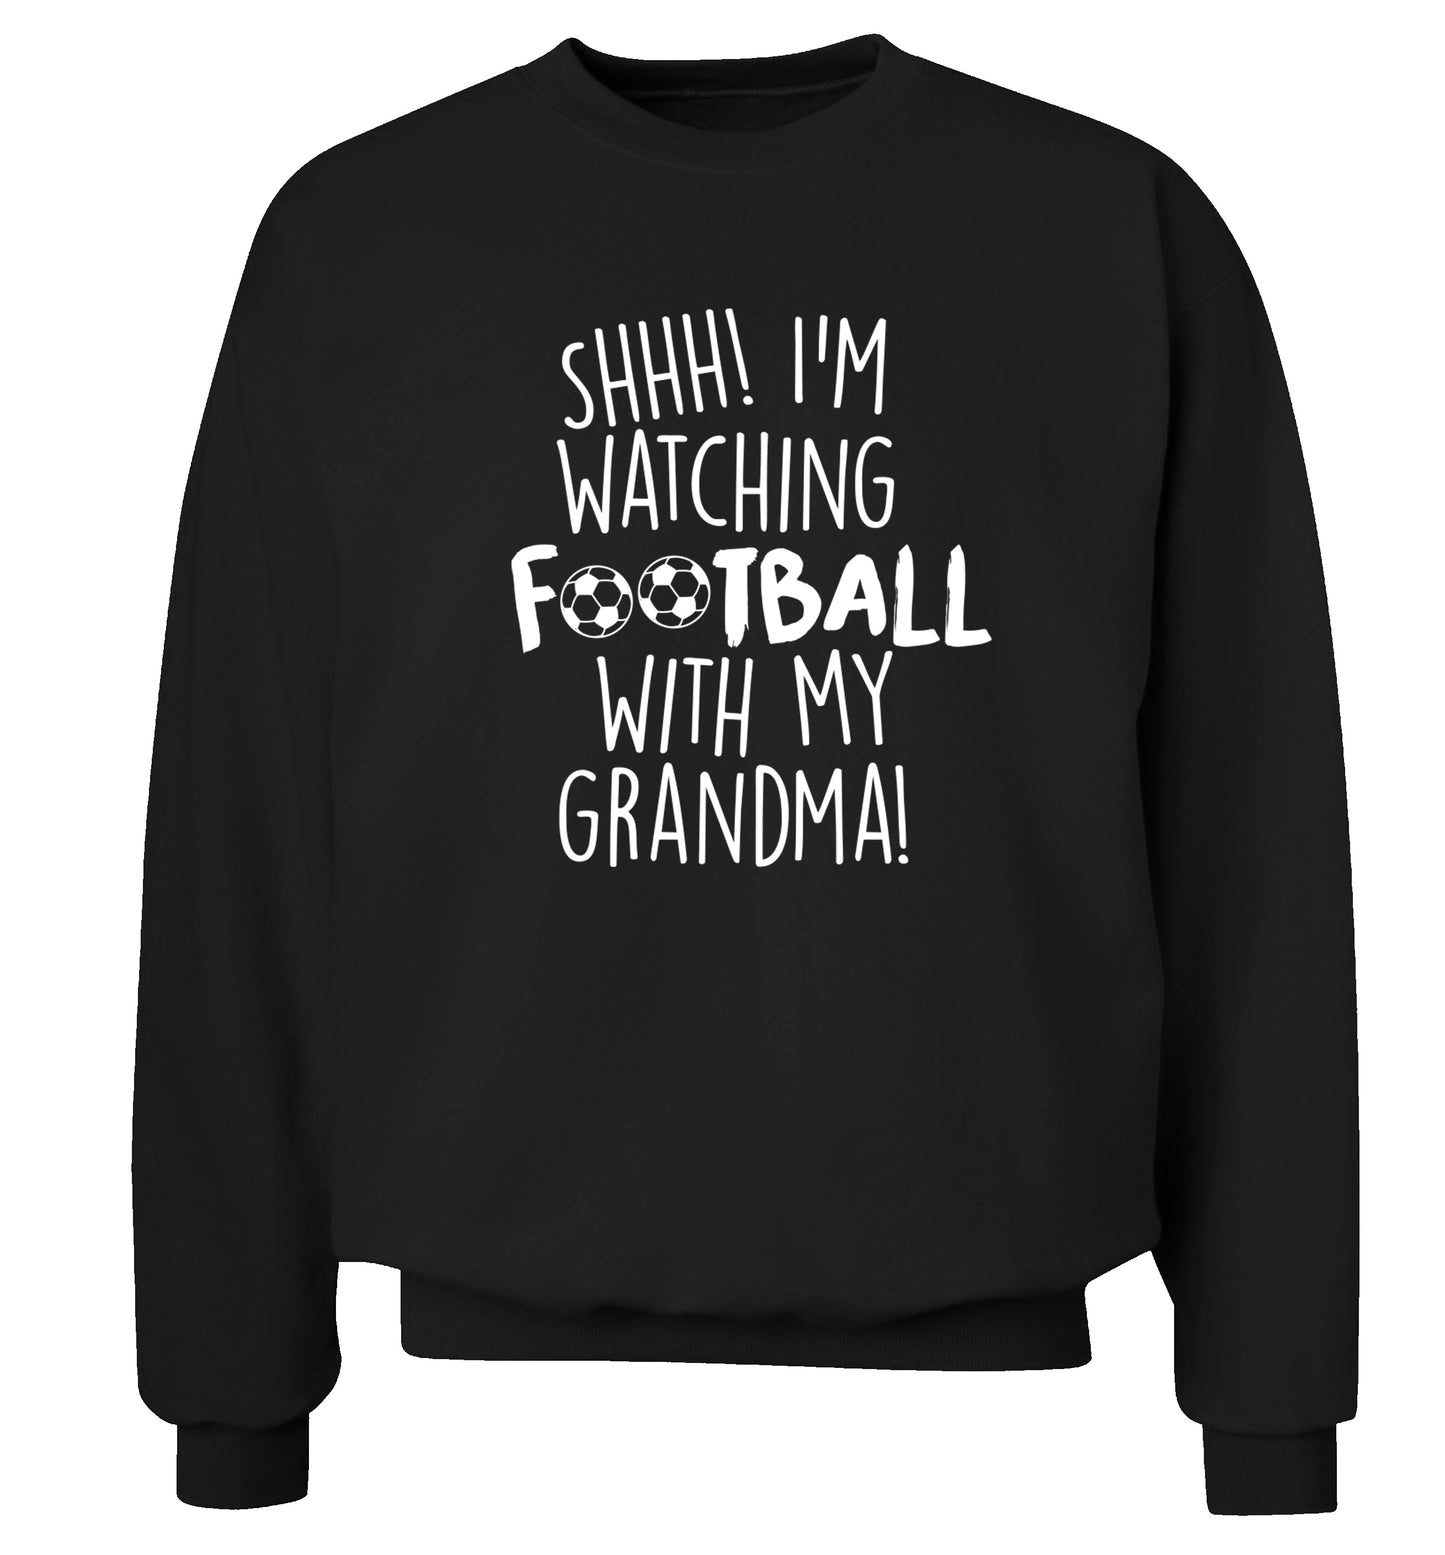 Shhh I'm watching football with my grandma Adult's unisexblack Sweater 2XL